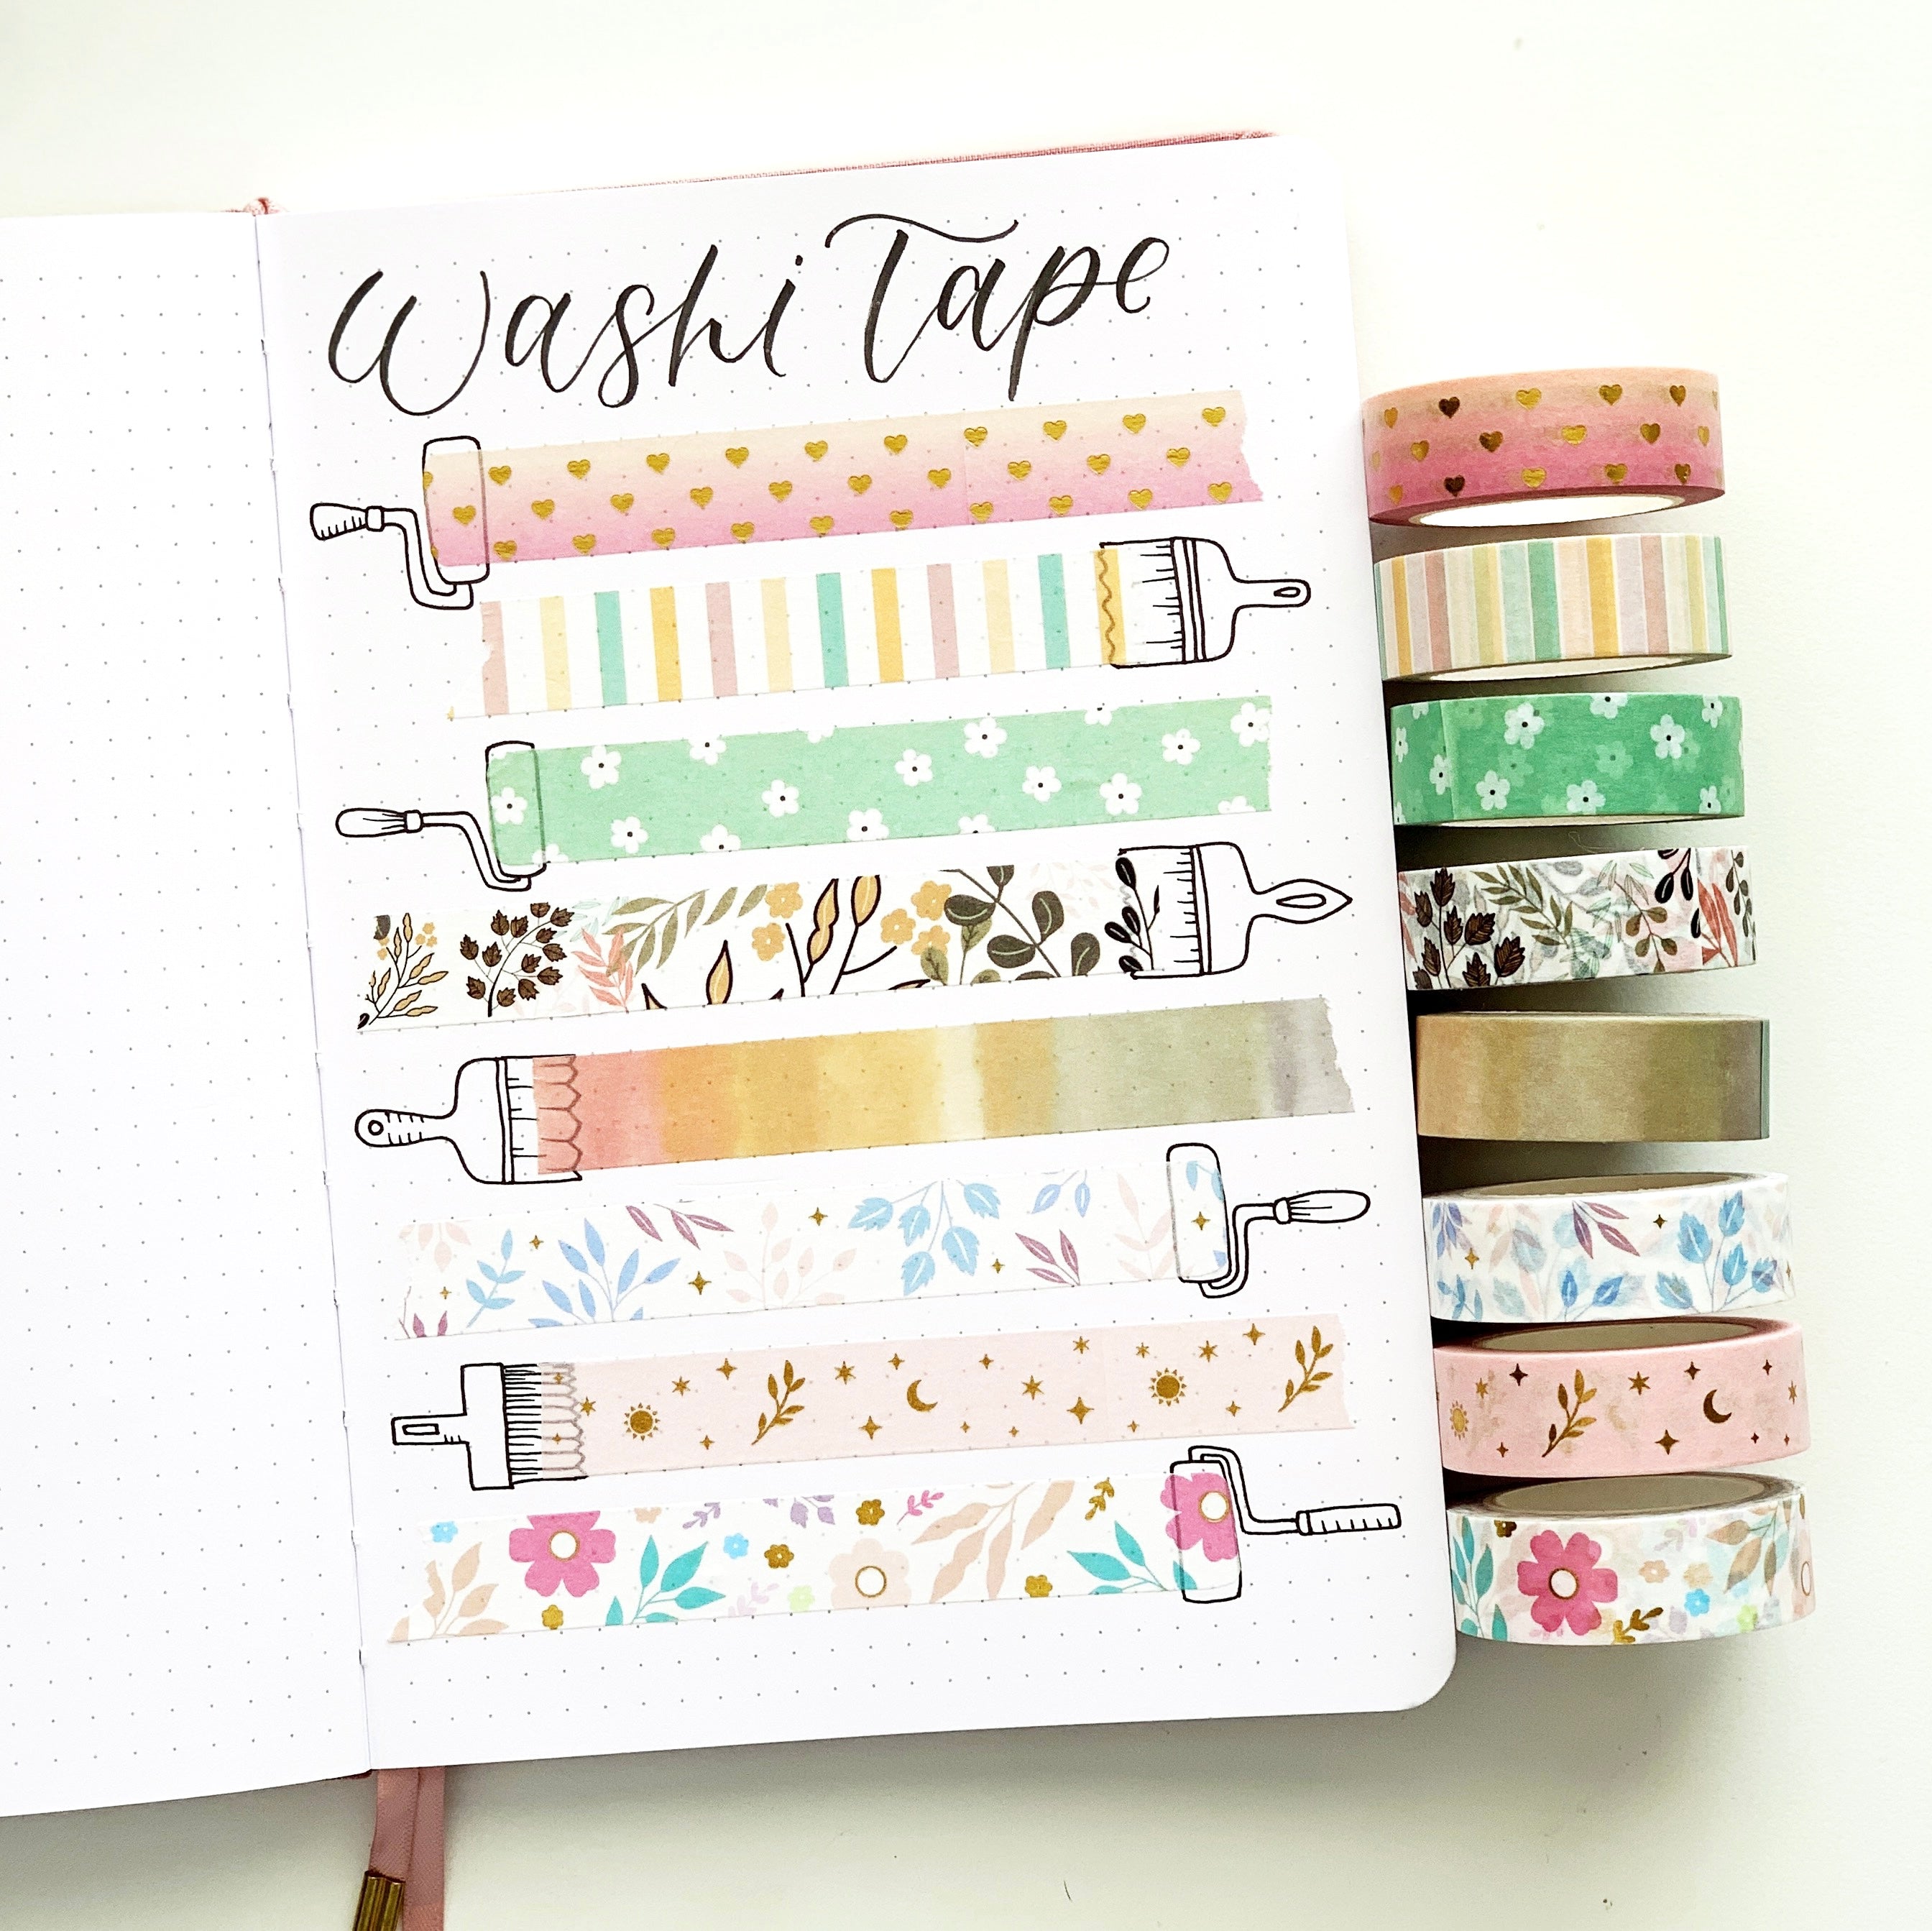 final Washi Tape spread